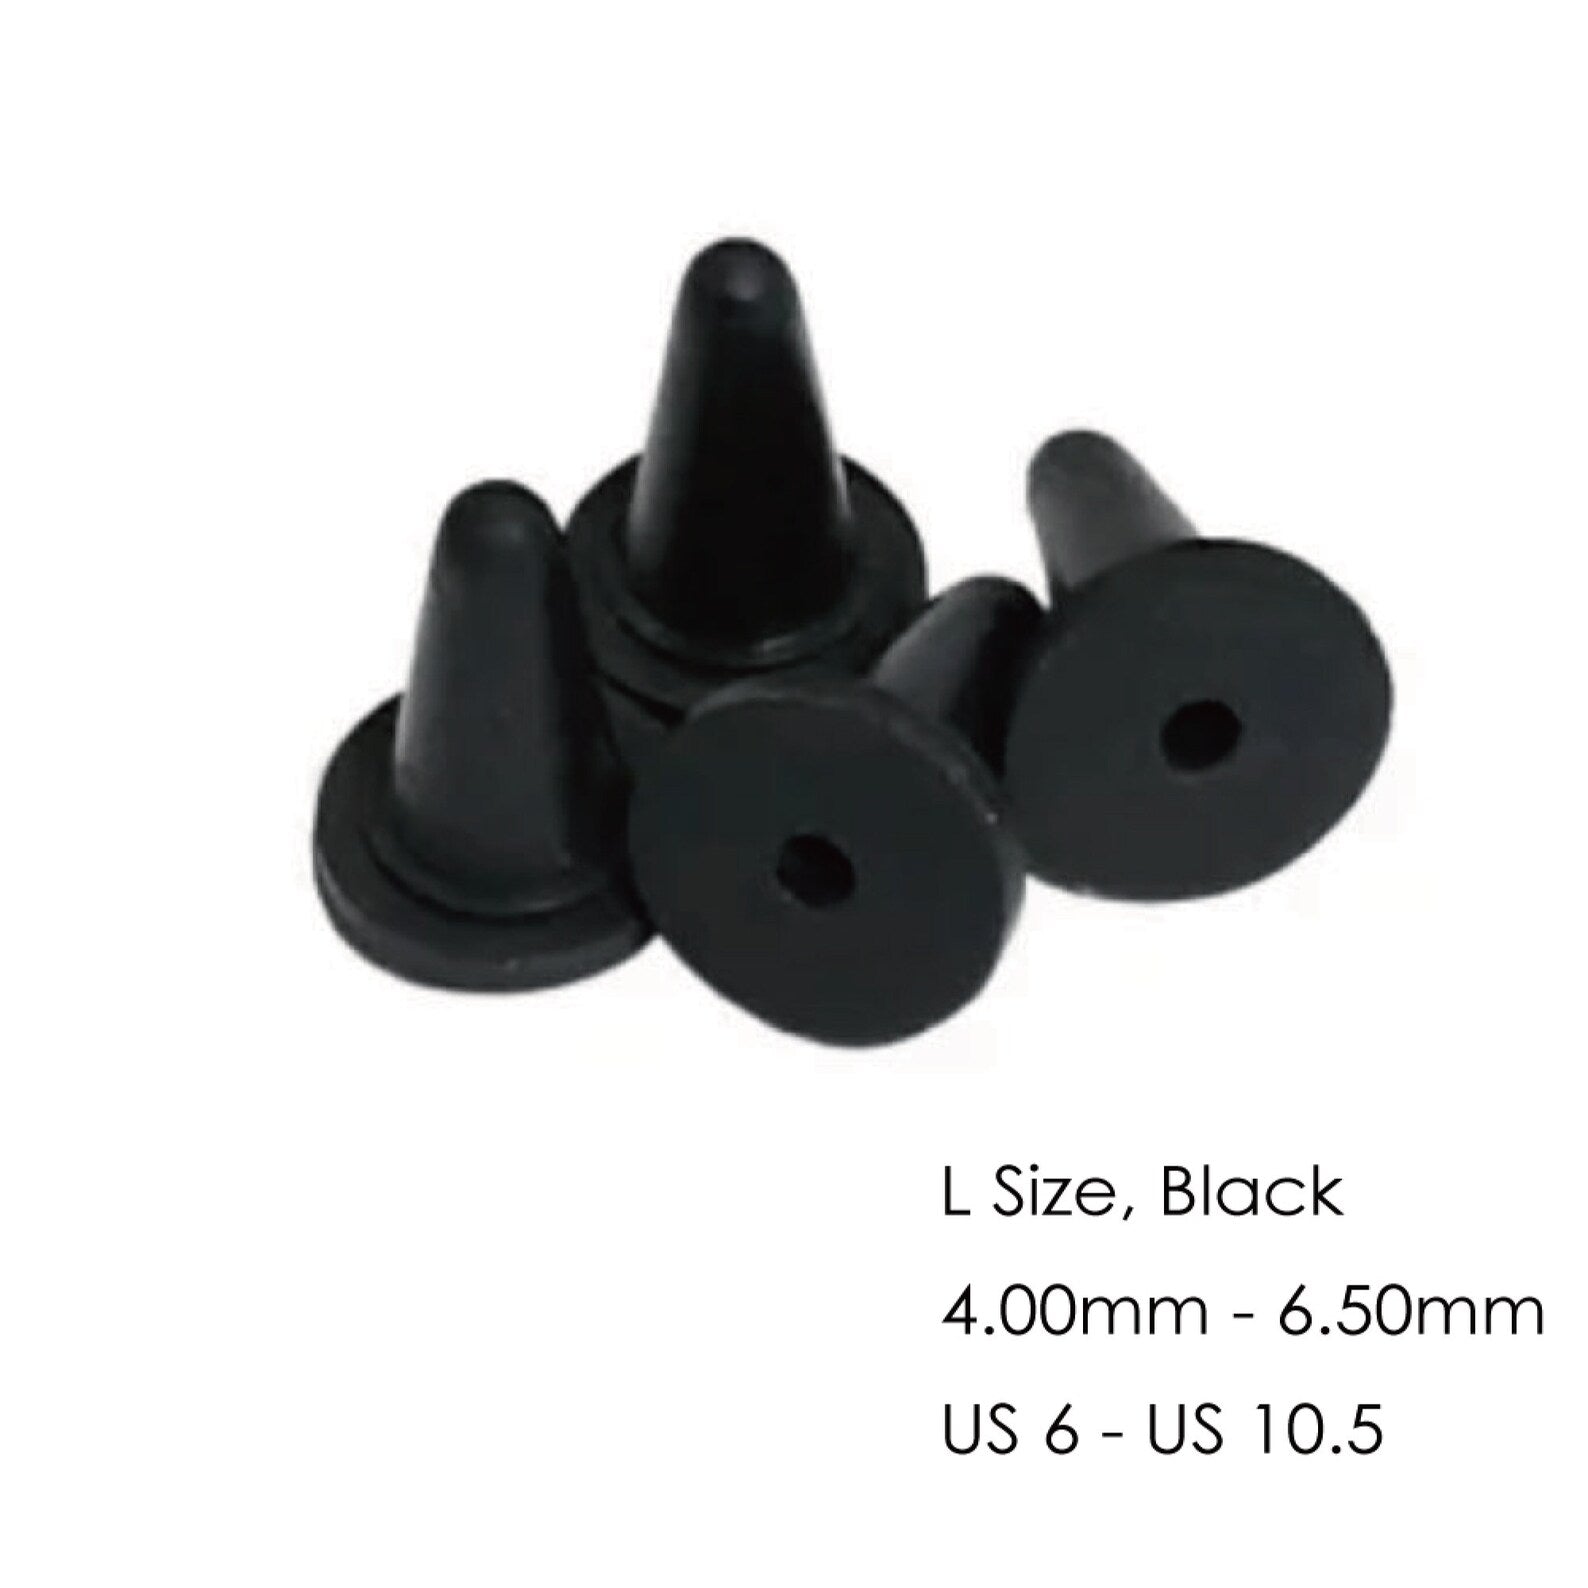 rubber point protectors - black (4mm - 6.5mm) at Wabi Sabi